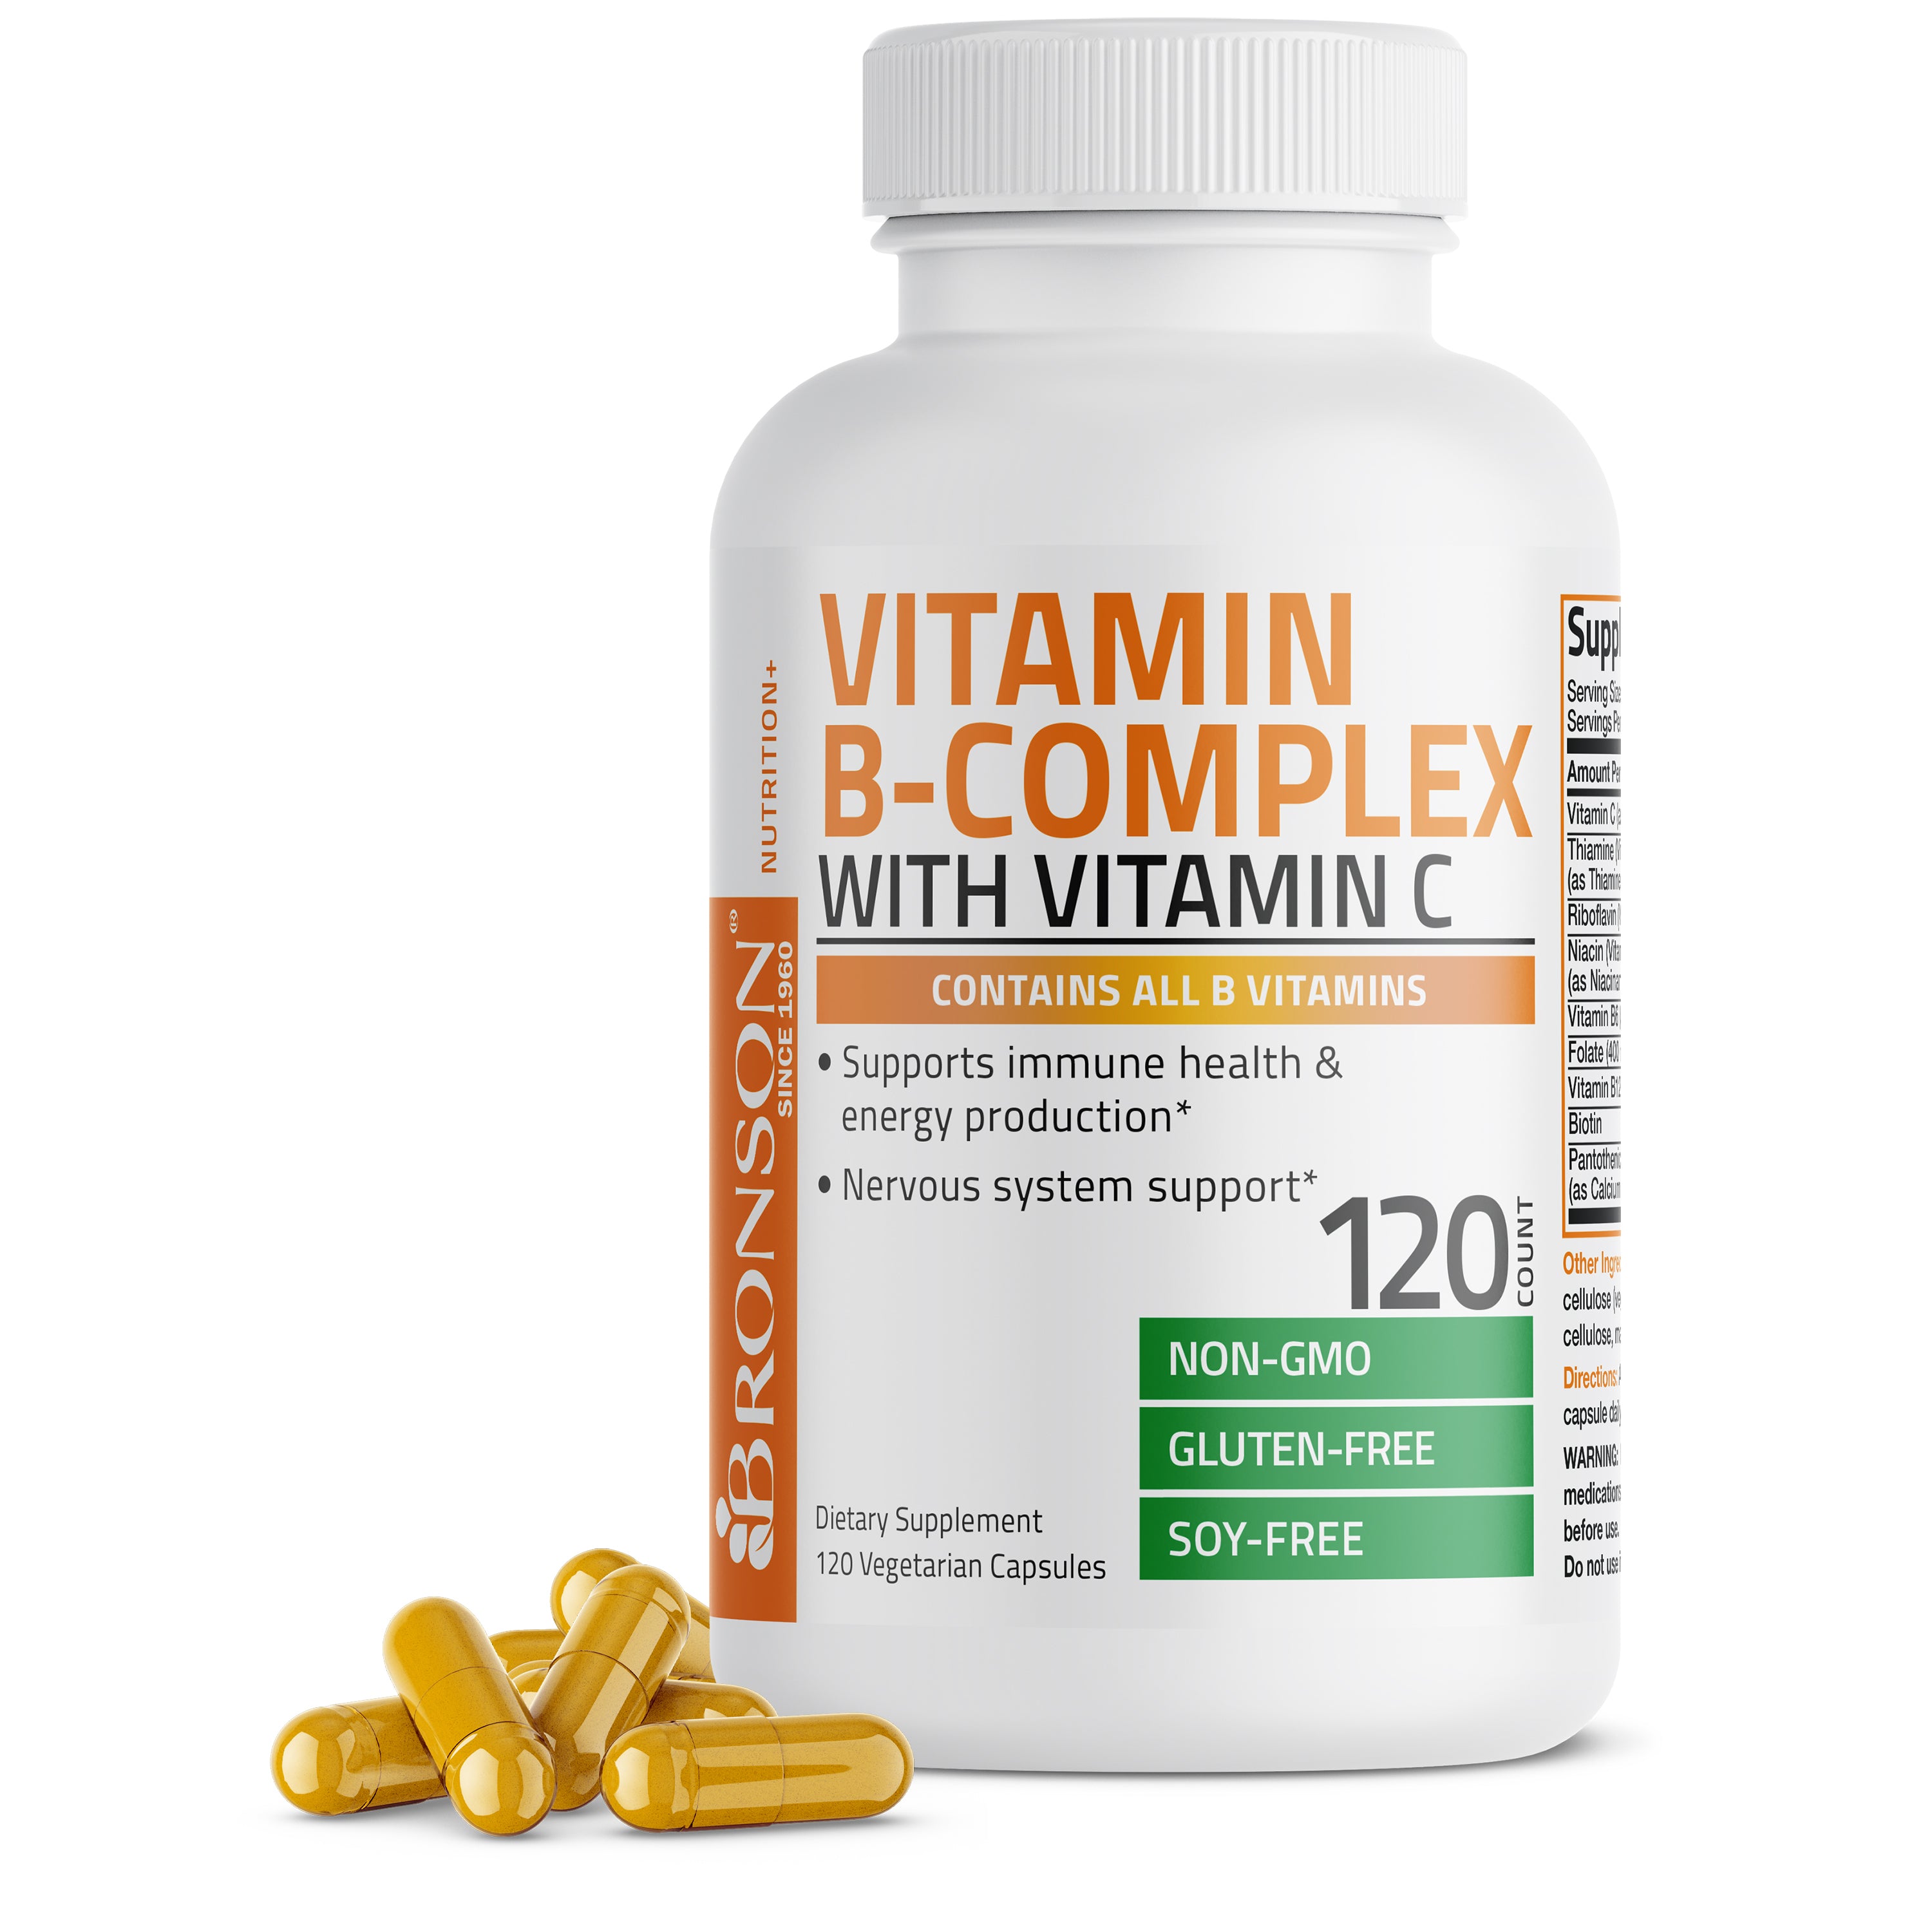 Vitamin B Complex with Vitamin C view 1 of 6